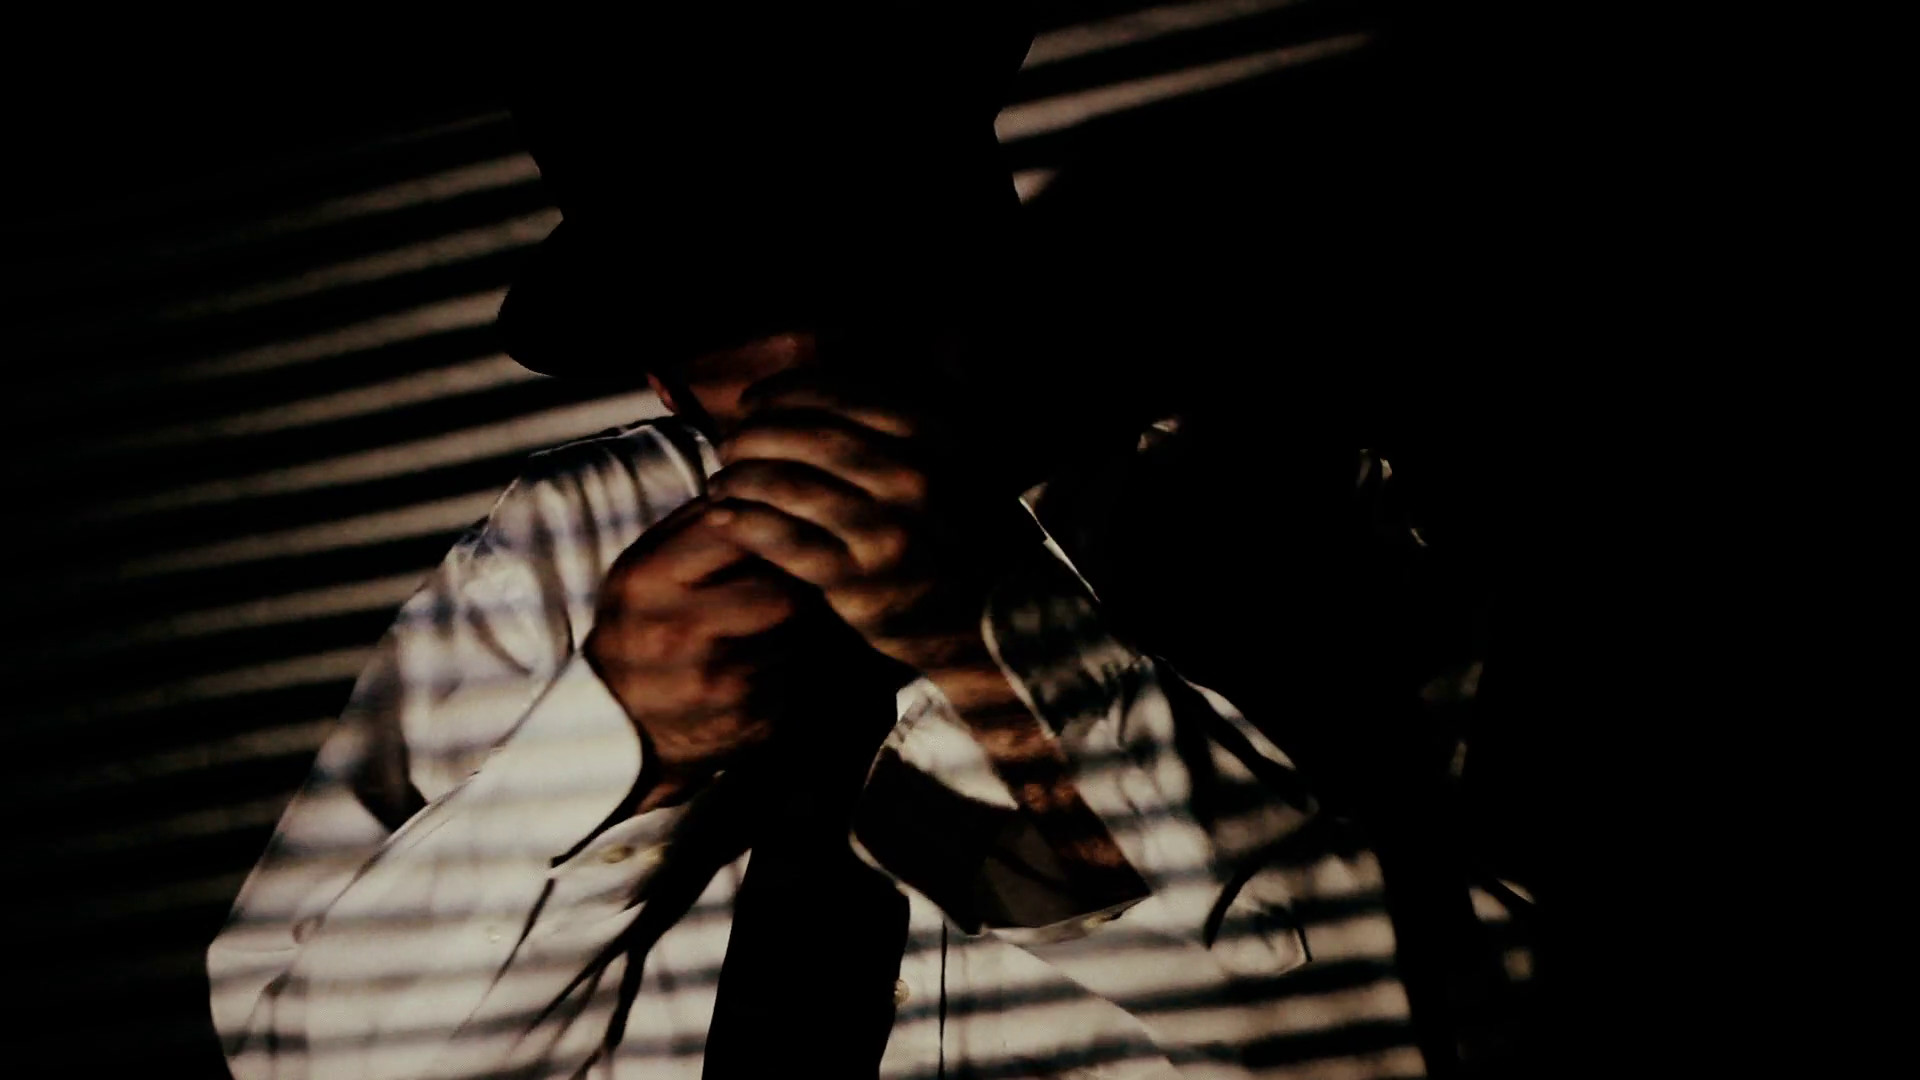 1920x1080 Film Noir Man Lighting Cigarette Shadows. Man, detective interrogator, in  film noir shadows